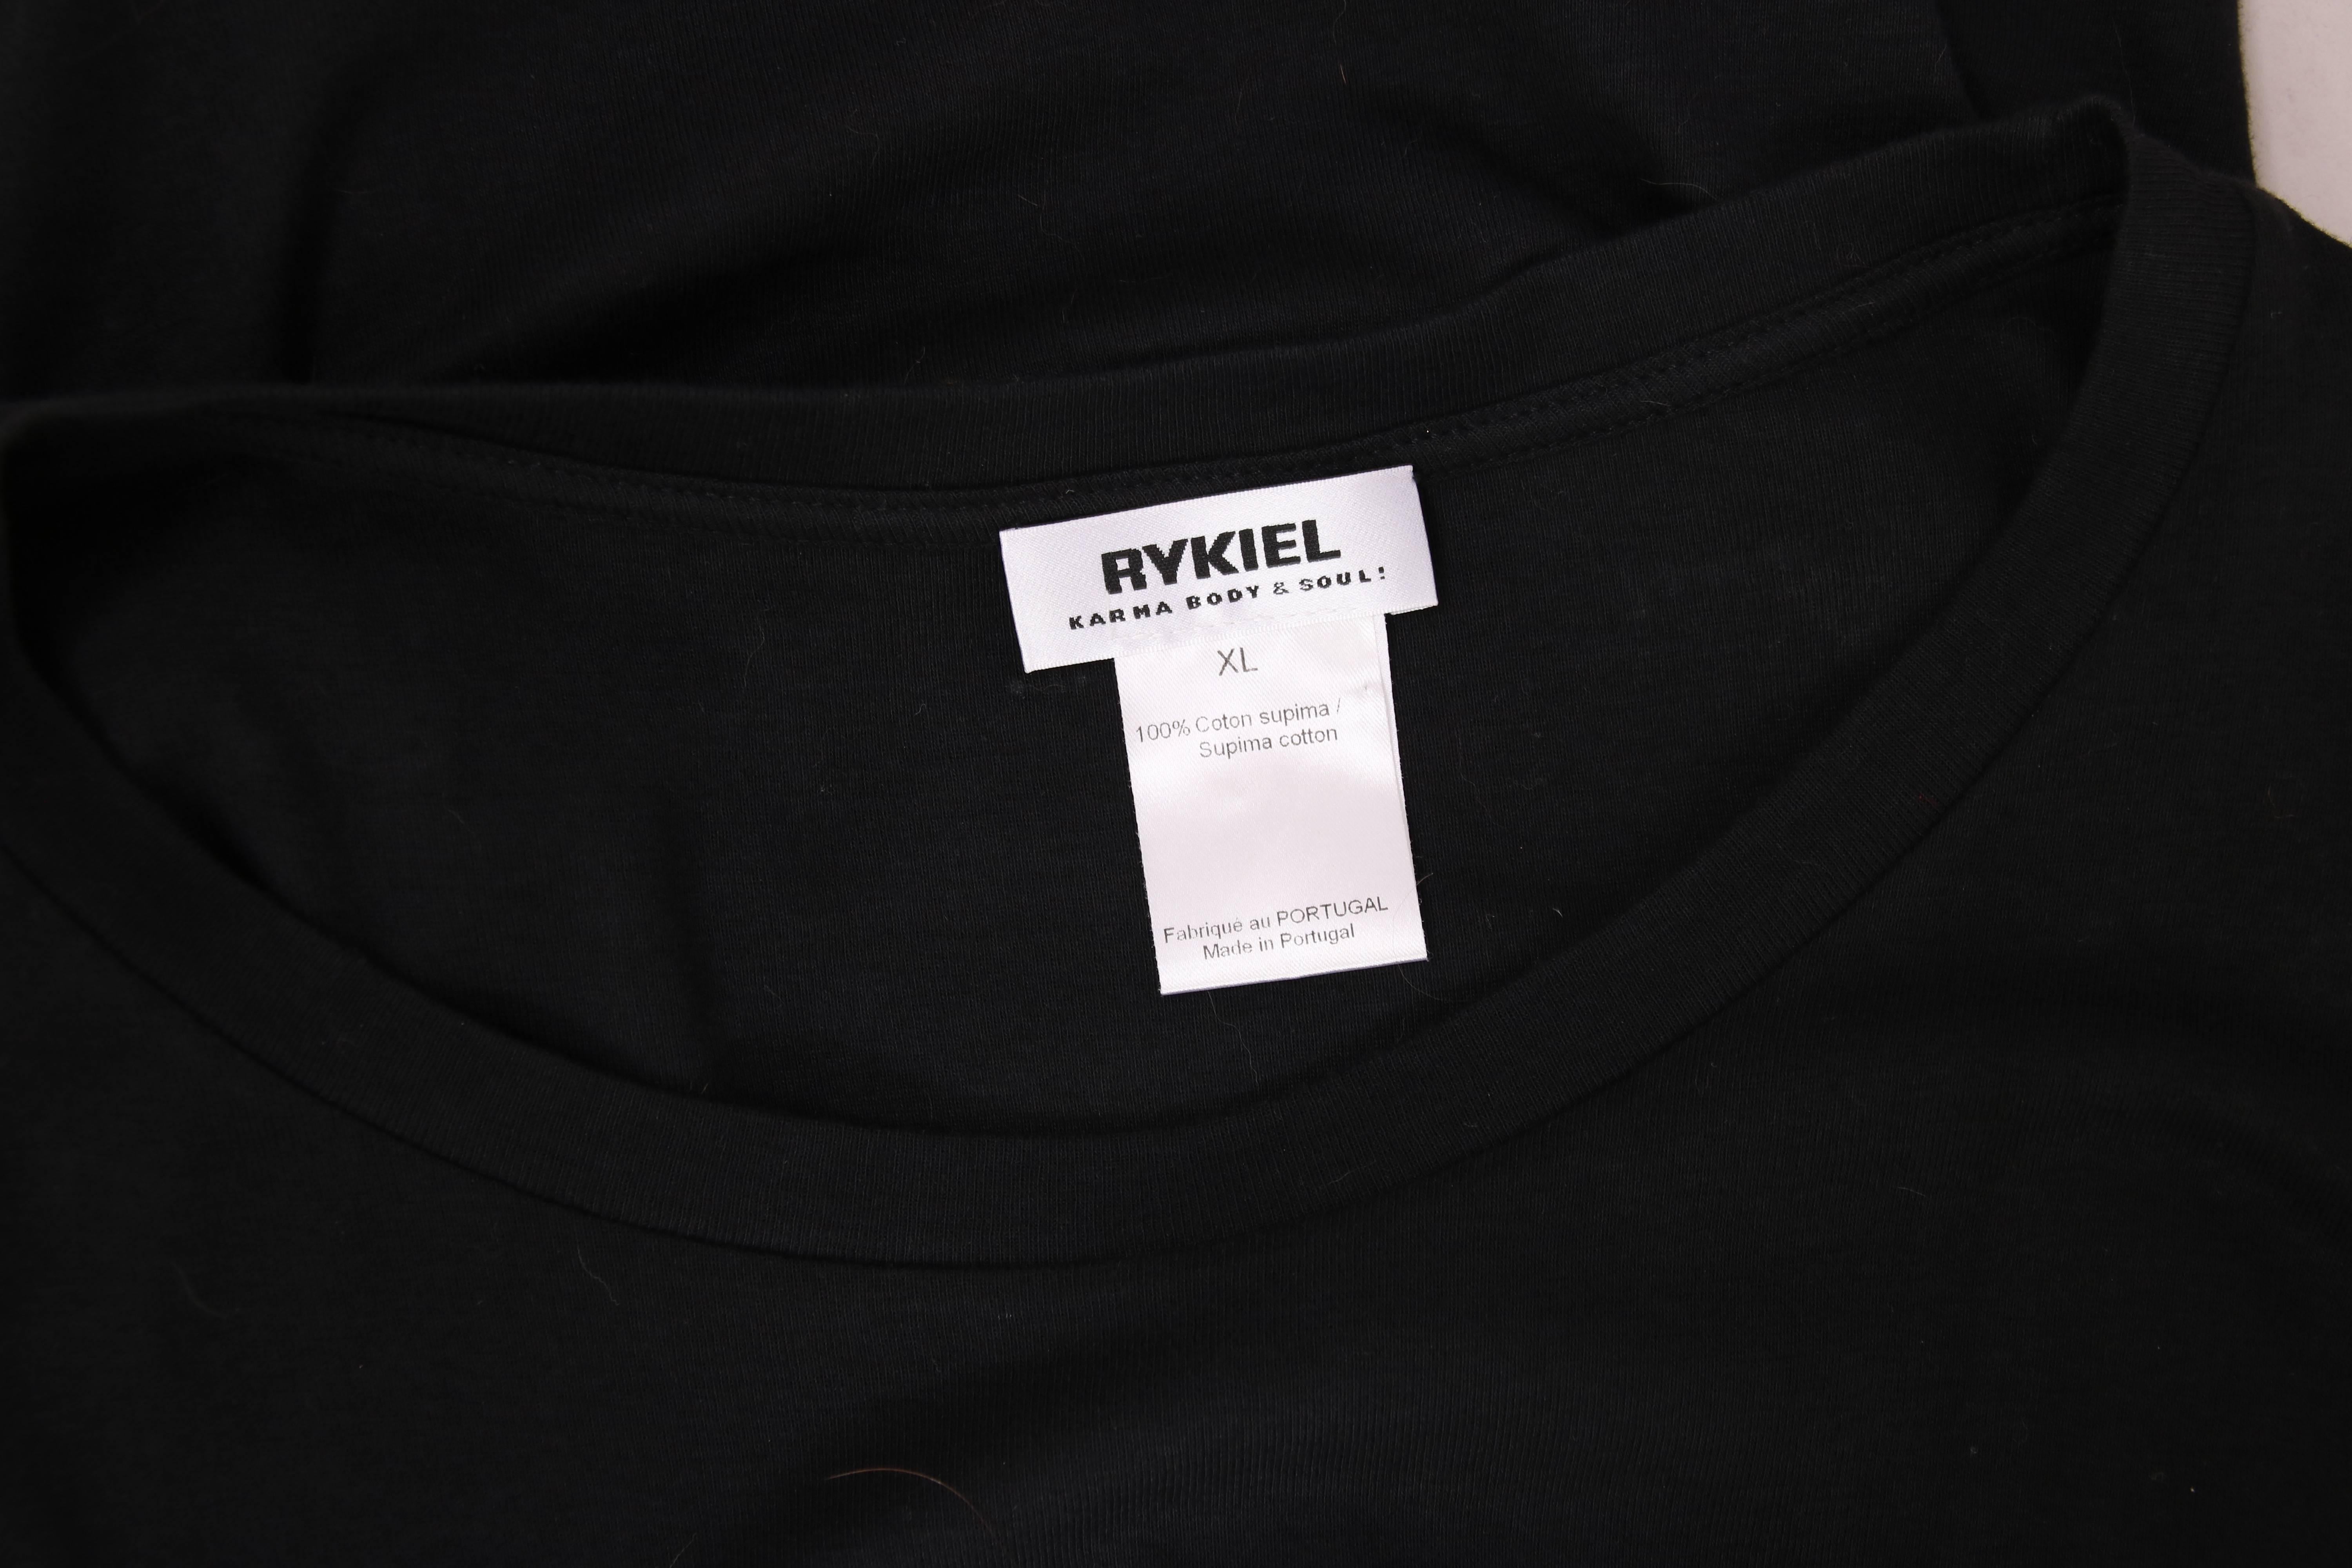 Sonia Rykiel Black Cotton Long Sleeved Shirt Top w/Jeweled Ladybug Design 3